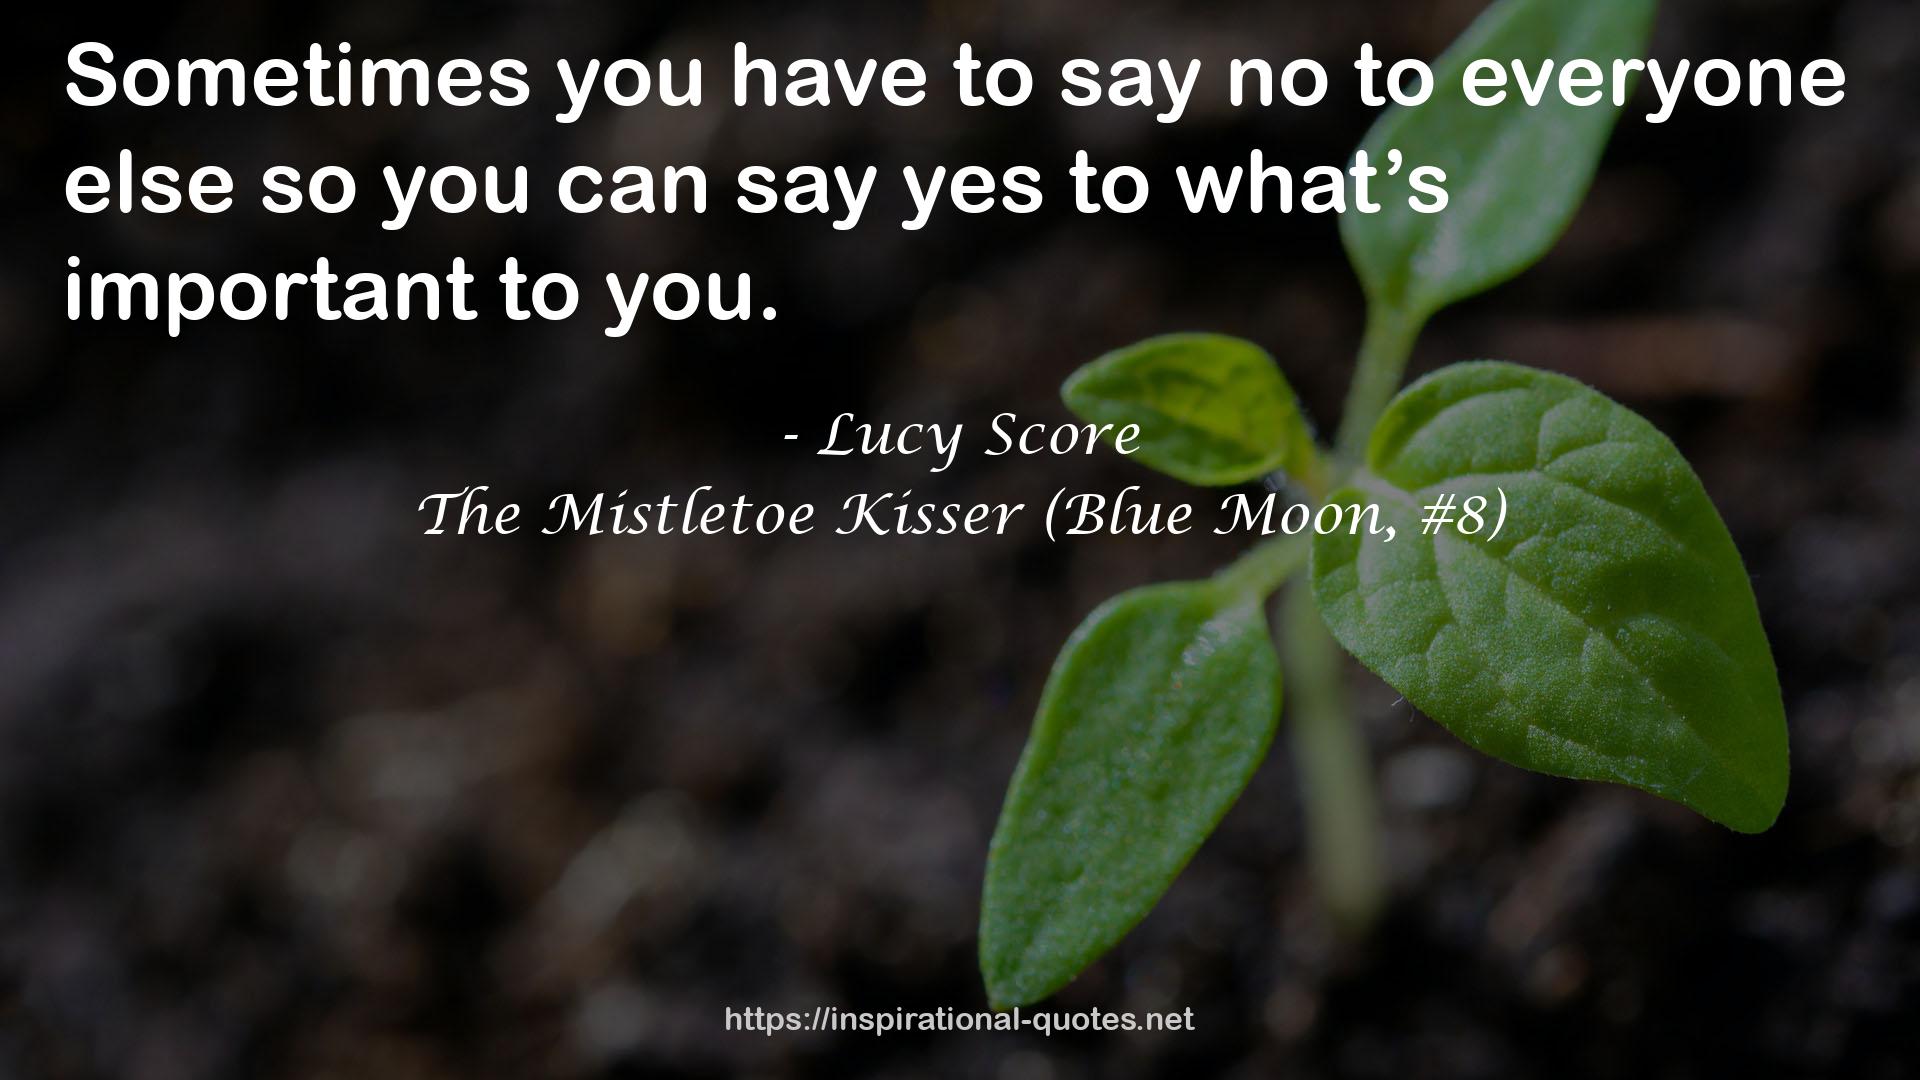 The Mistletoe Kisser (Blue Moon, #8) QUOTES